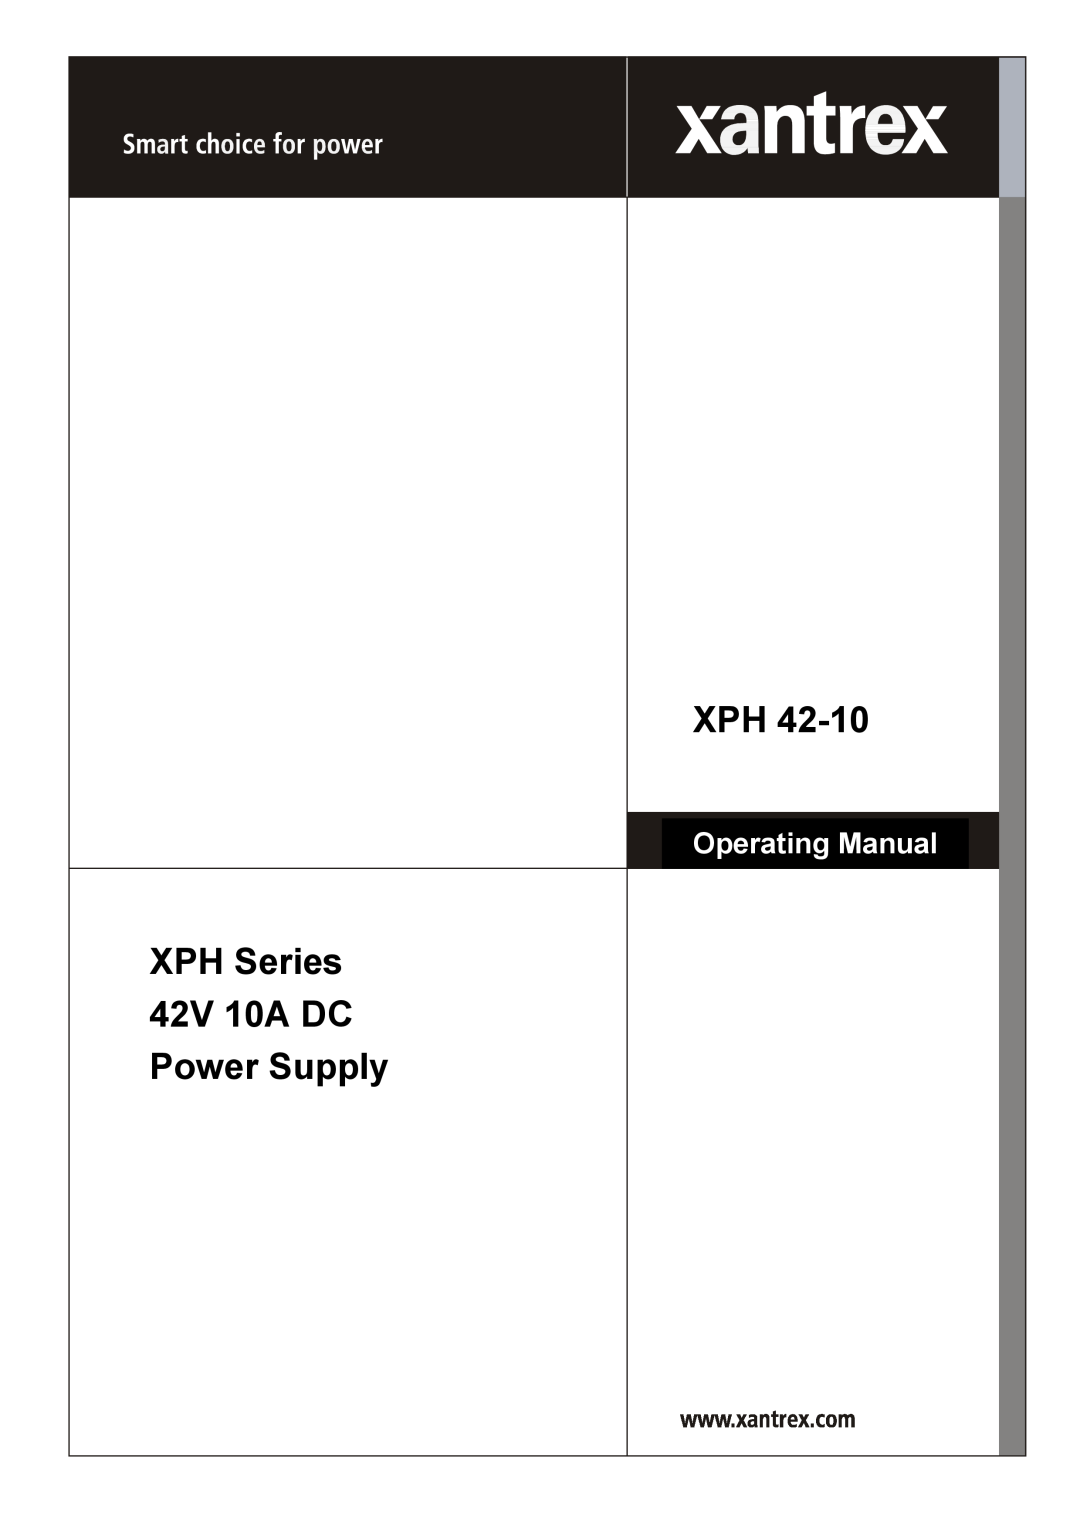 Xantrex Technology manual XPH Series 42V 10A DC Power Supply, Operating Manual 